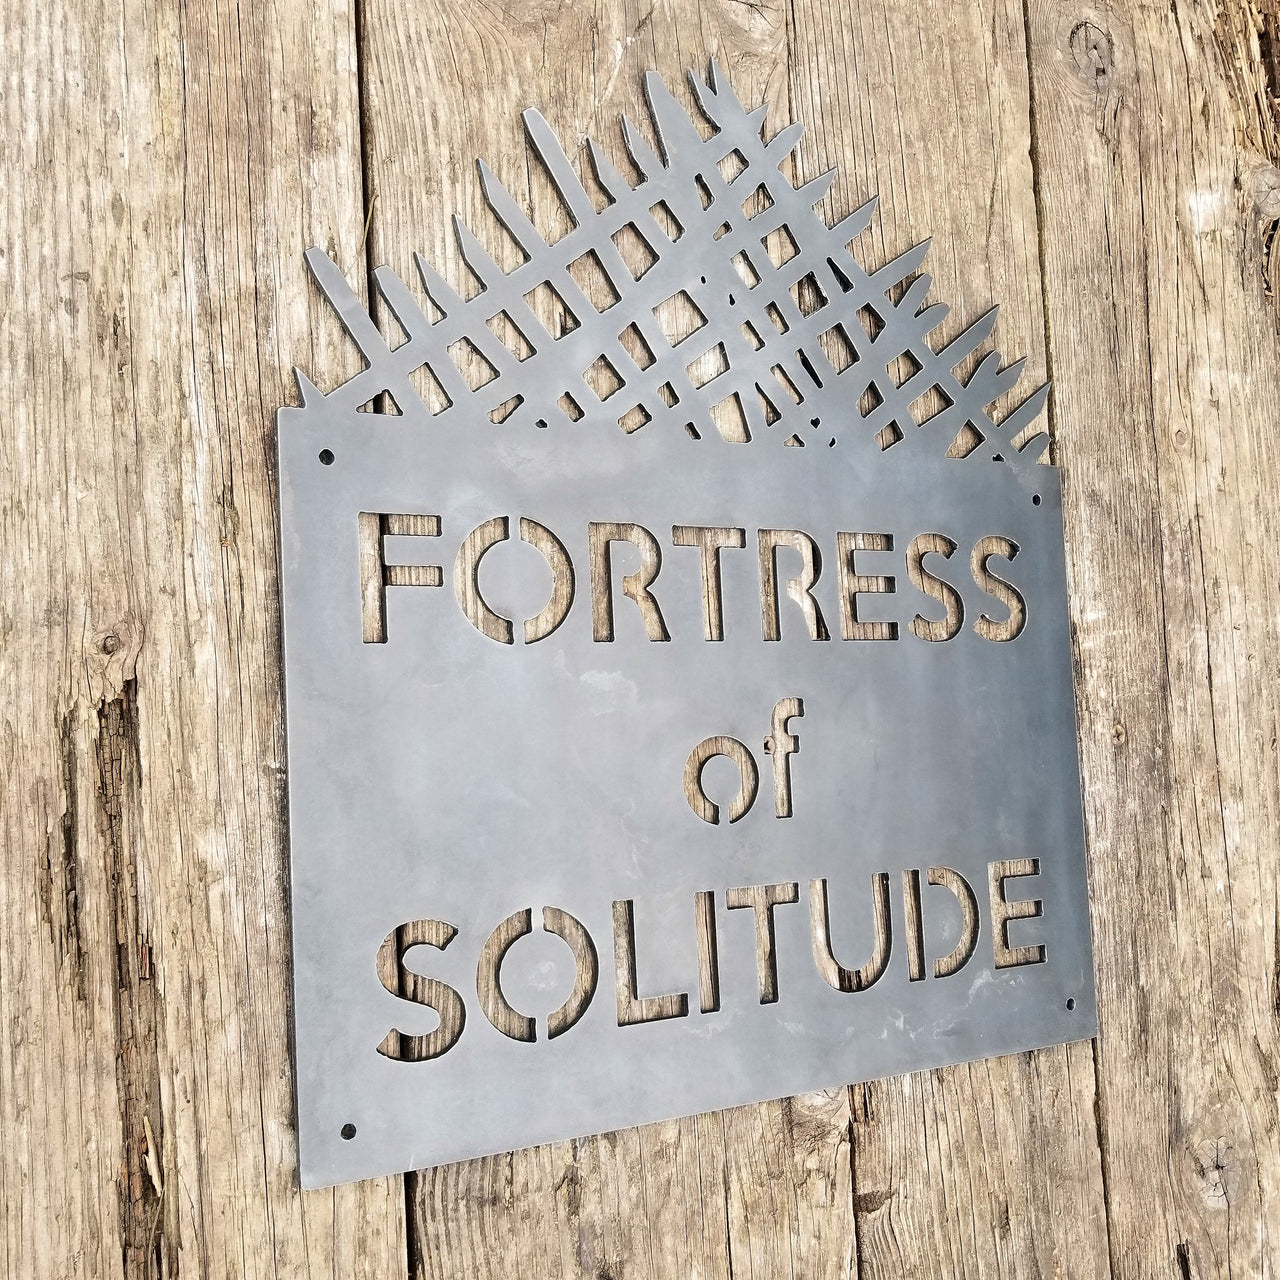 Fortress of Solitude - Metal Man Cave Sign - Fan Art, Superman Tribute, Comic Decor